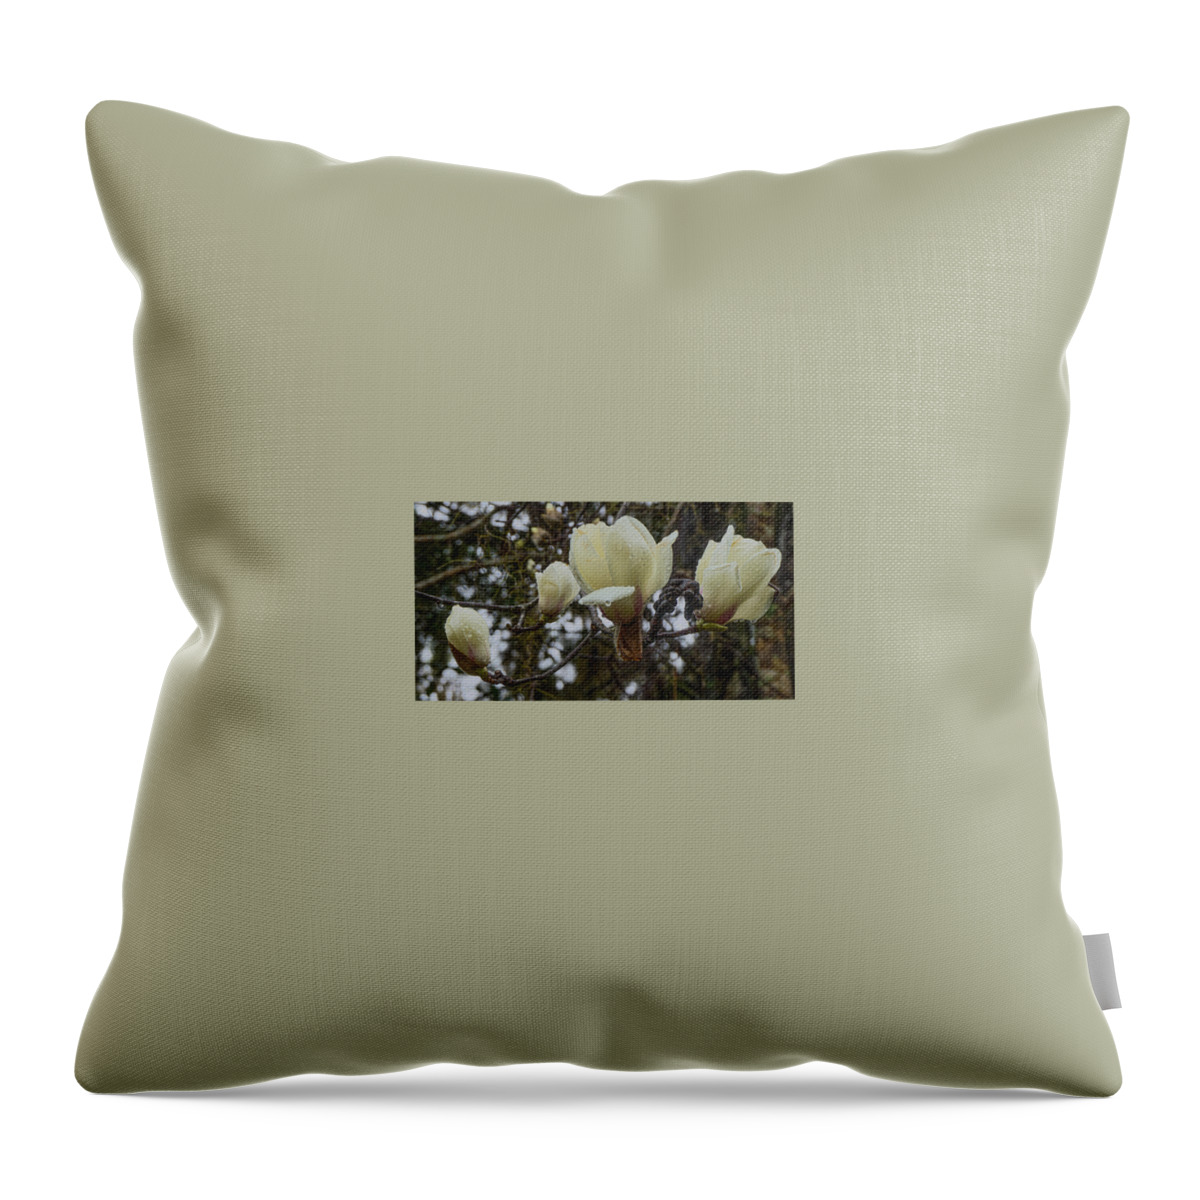 Camillias#alfredbmaclaygardens#botanicalgardens#tallahasseeflorida#usa Throw Pillow featuring the photograph Camellia Flowers by Katherine Y Mangum